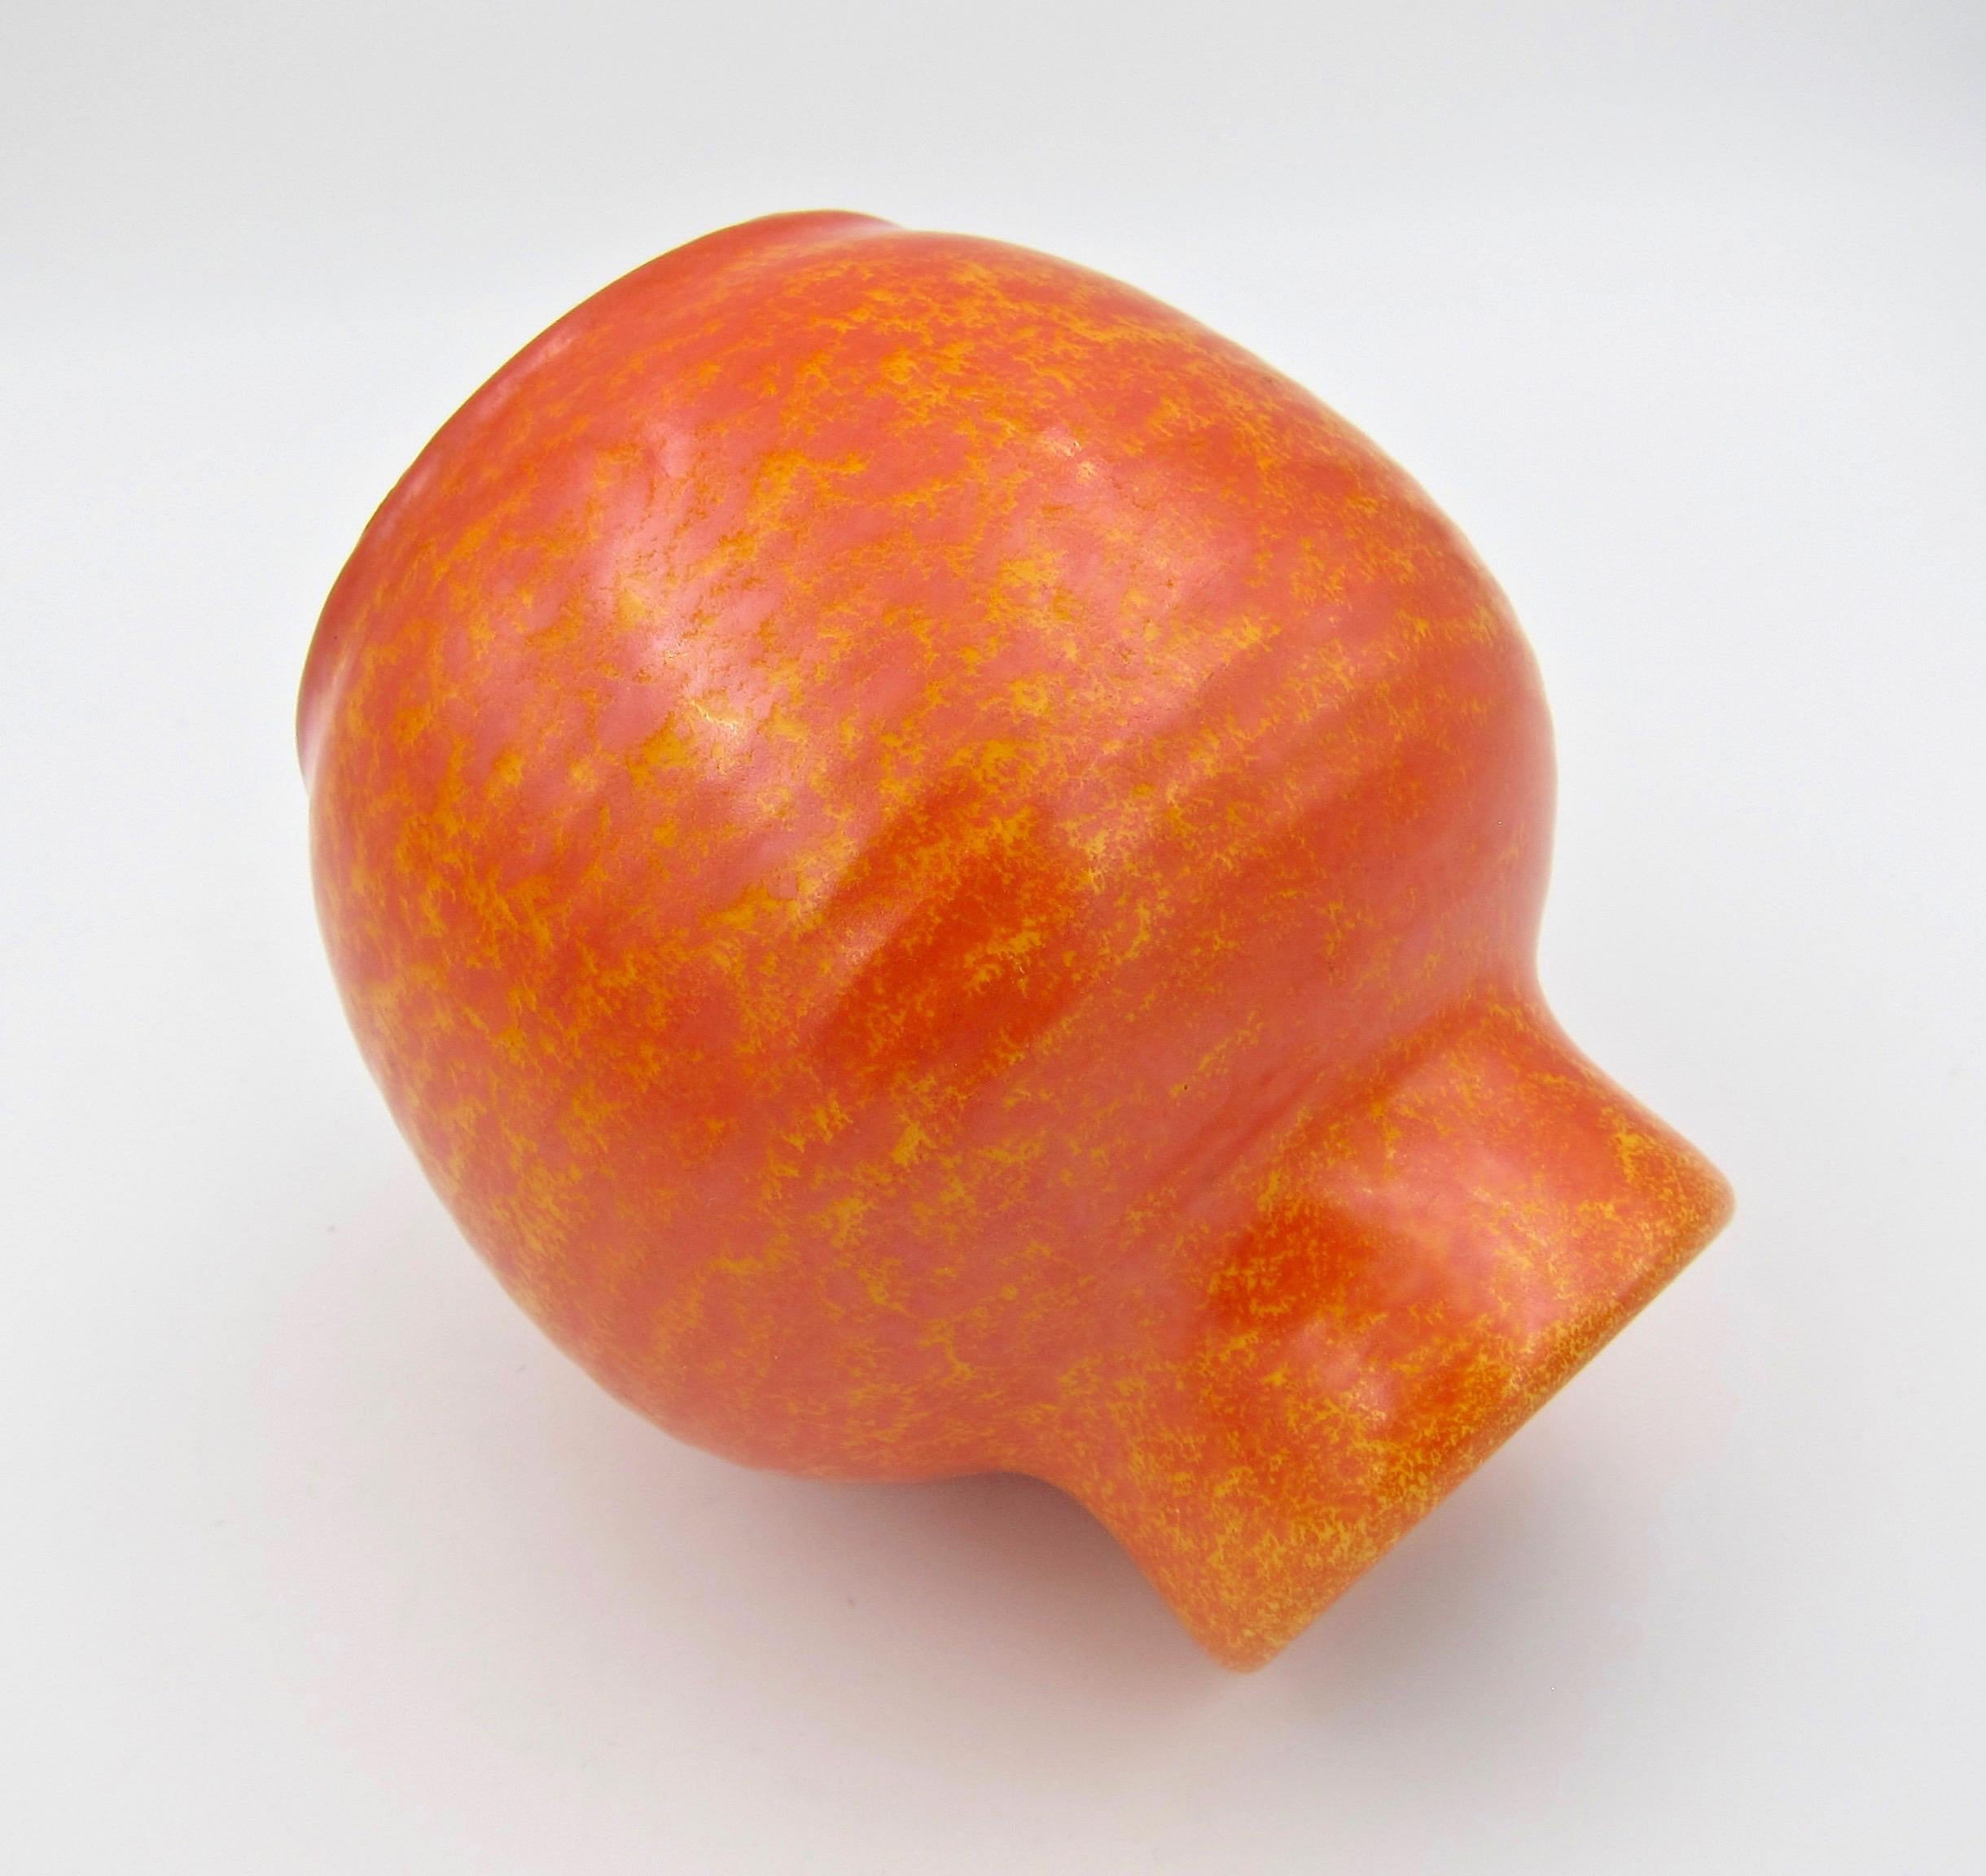 Glazed Art Deco Royal Lancastrian Vase with an Orange Vermillion Glaze, Signed